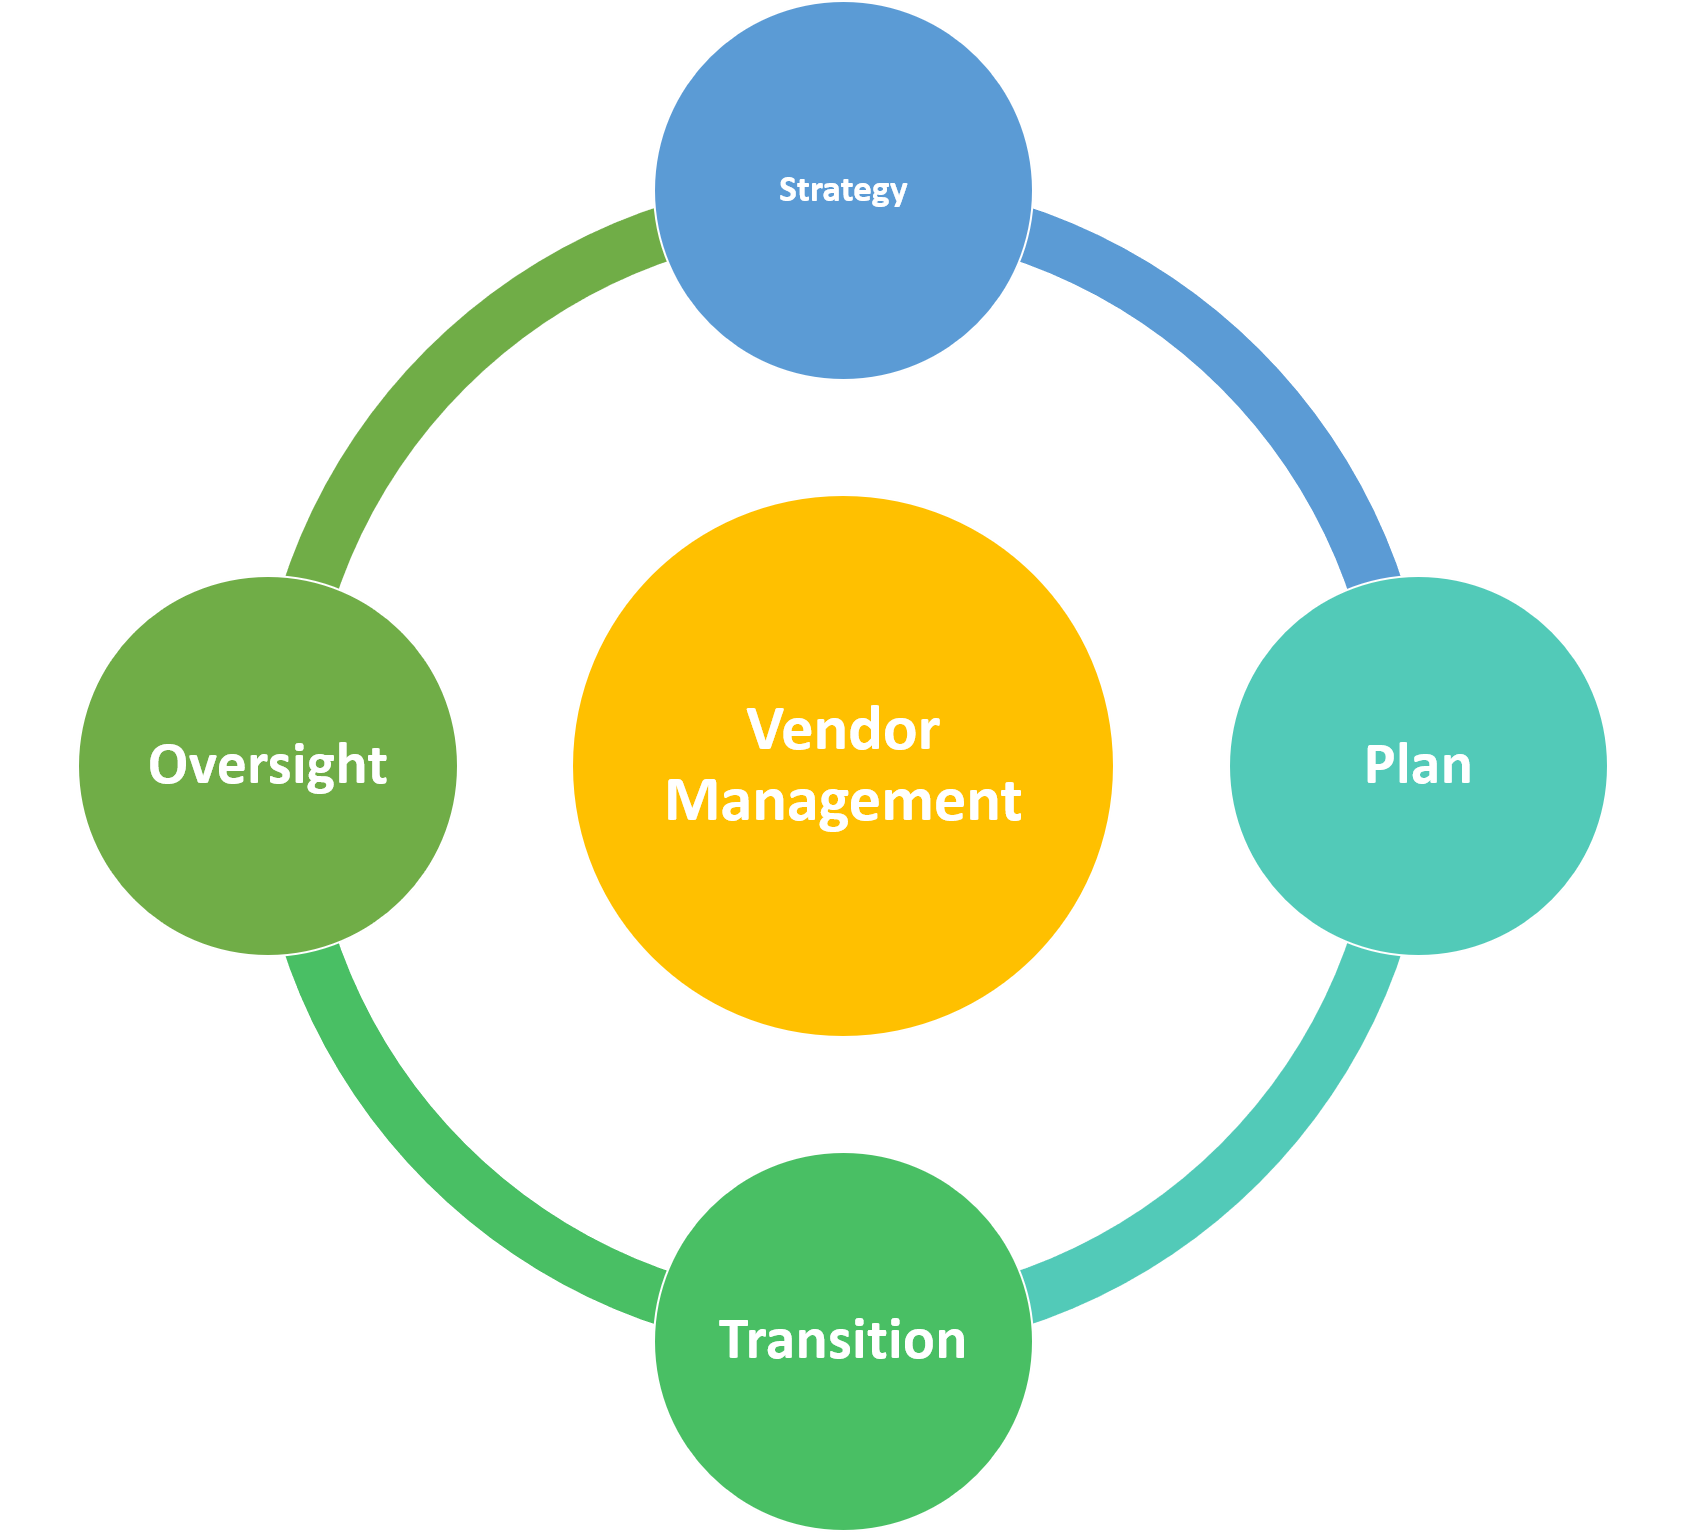 Resolve peer. Vendor Management картинки. Менеджмент. Organizing Management. Management functions.